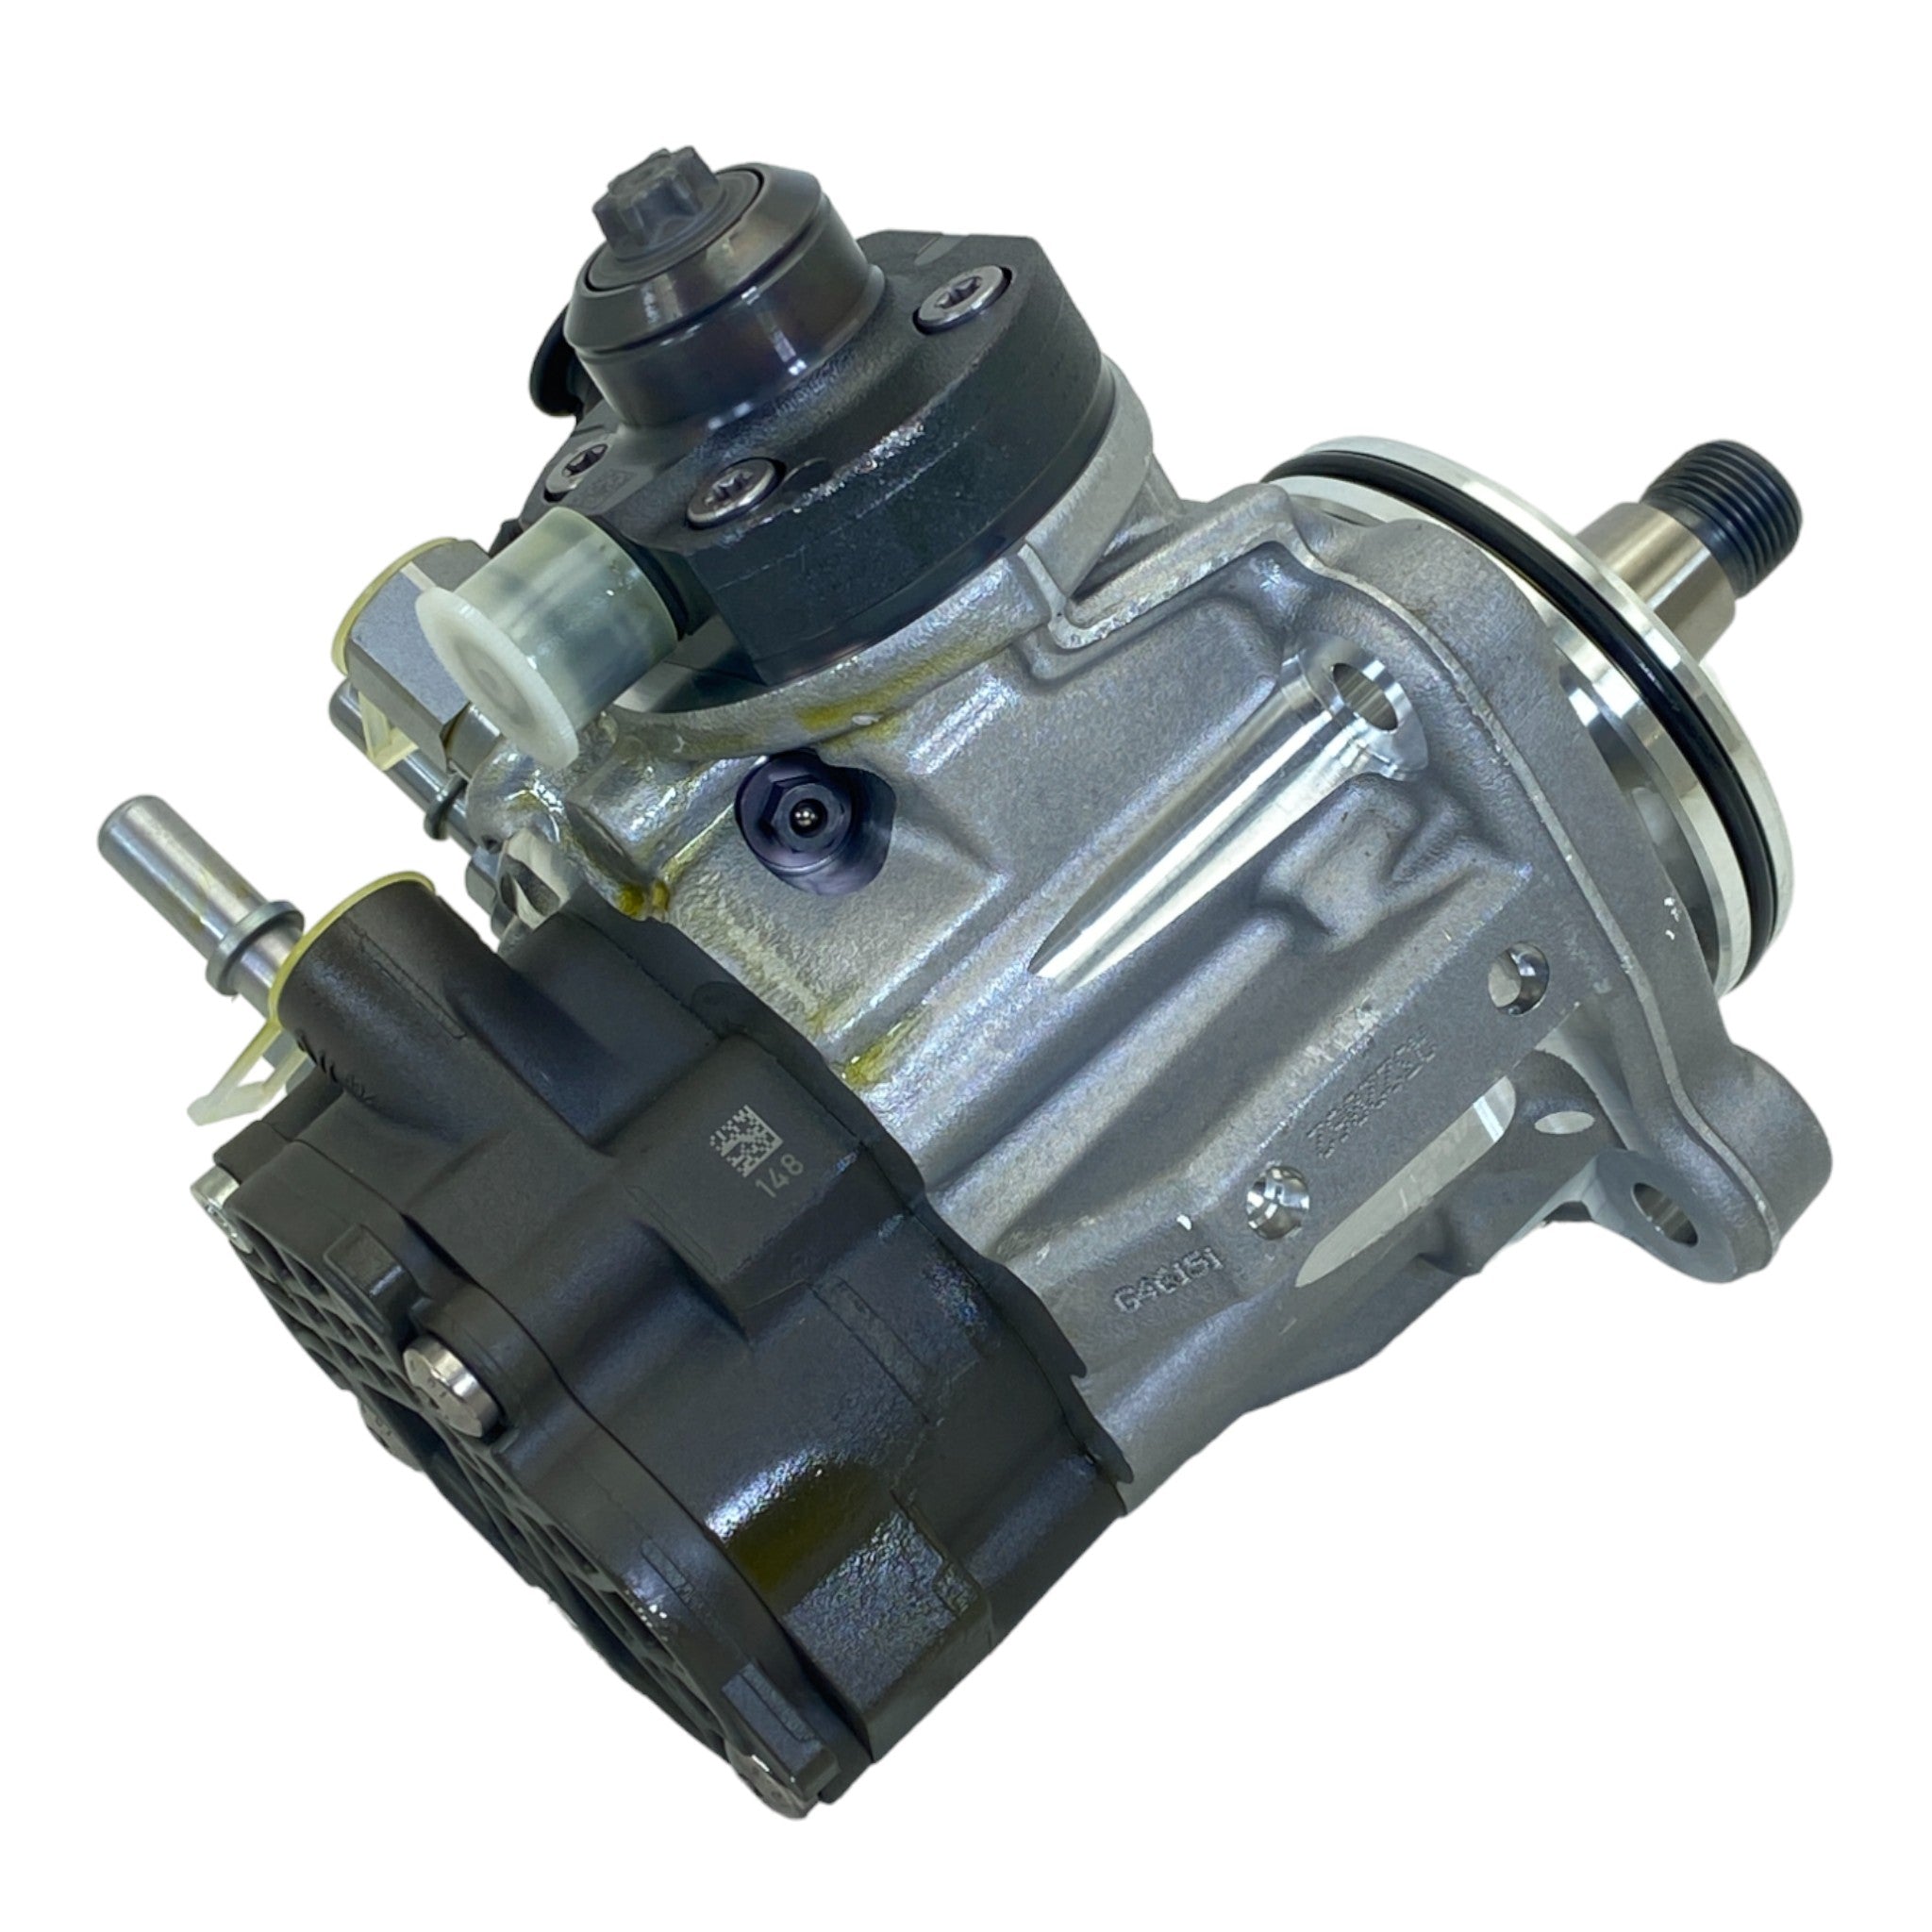 5529762 Genuine Cummins Fuel Injection Pump For 6.7L Isb/Qsb Engines